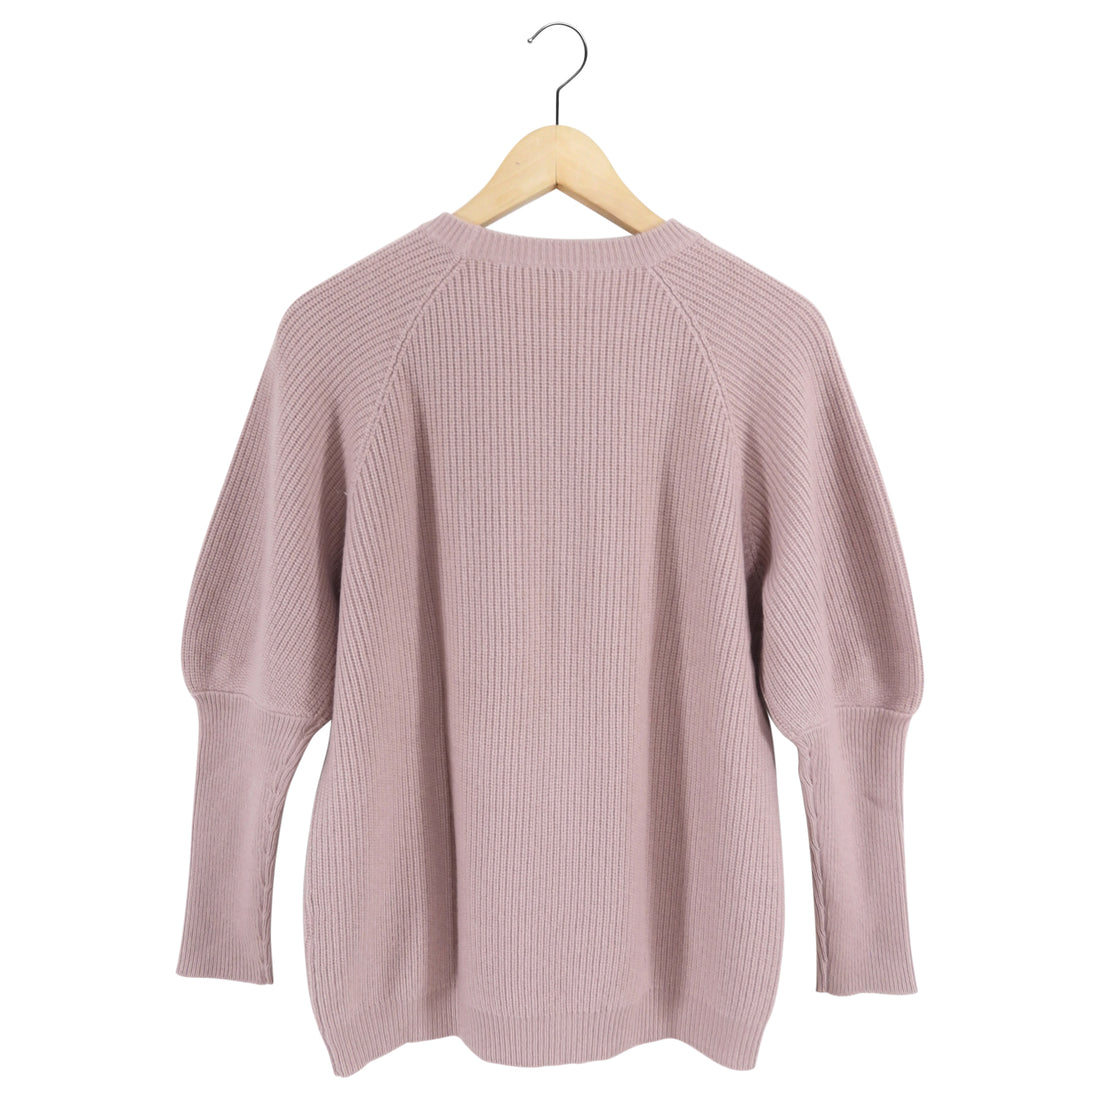 Brunello Cucinelli Cashmere Quartz Pink Knit Sweater - S